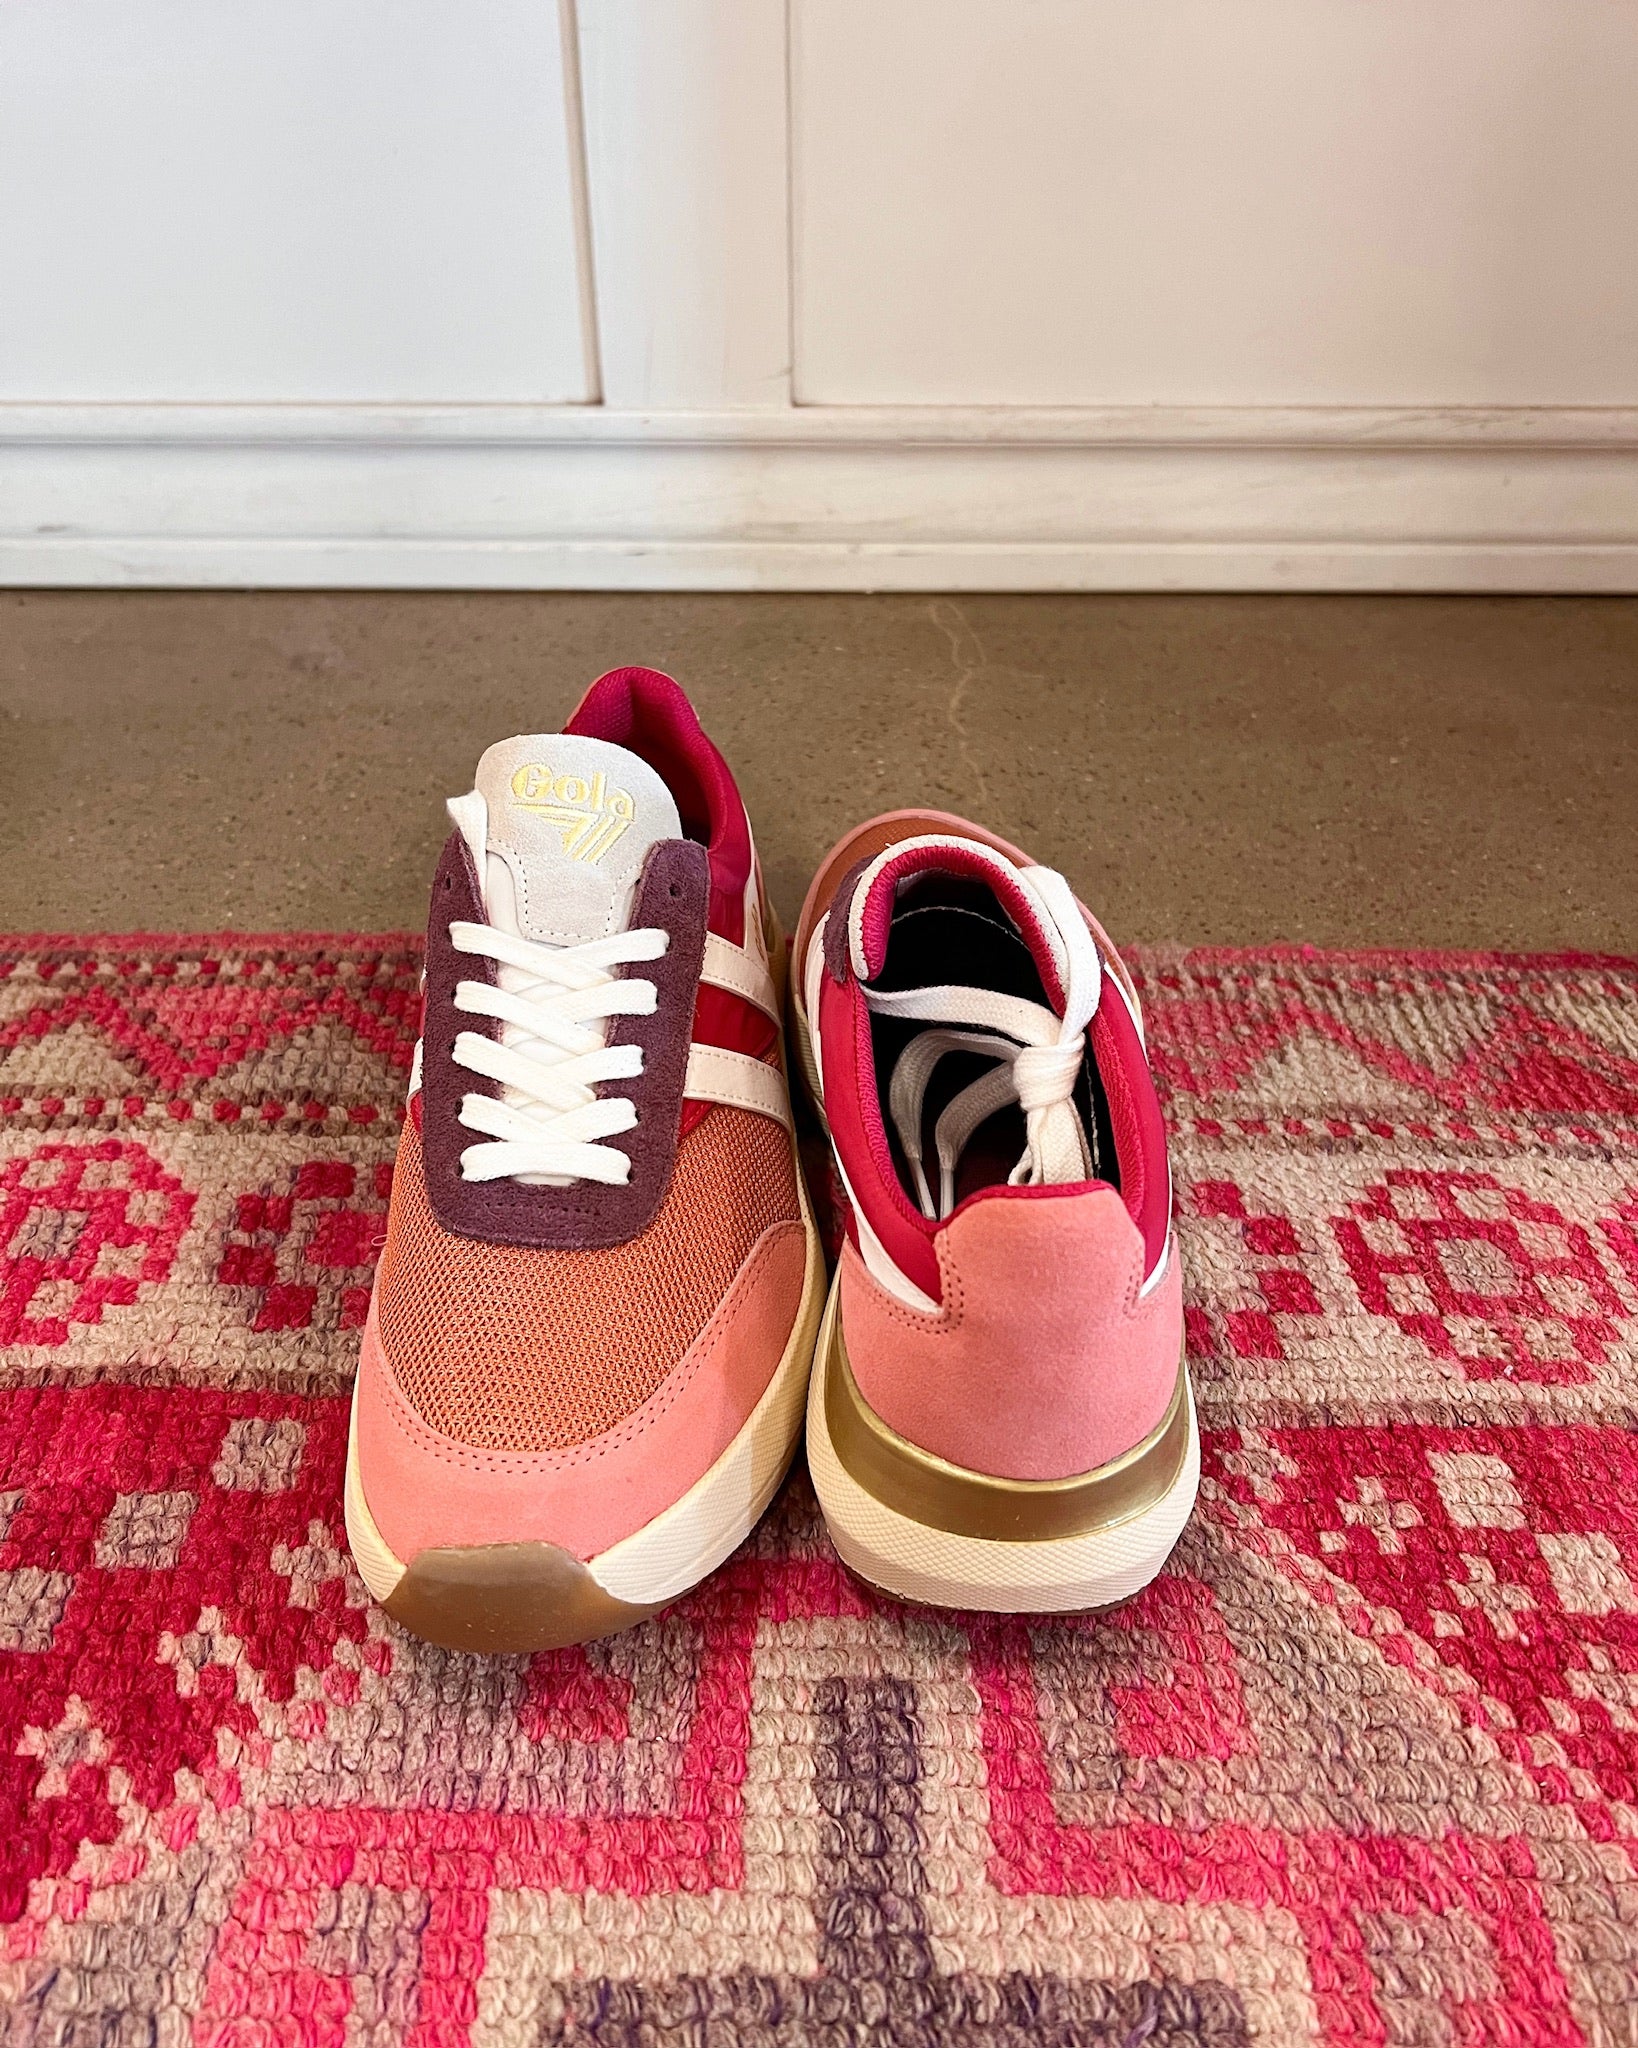 Gola Women's Raven Orange Spice/Raspberry/Coral Pink Sneakers